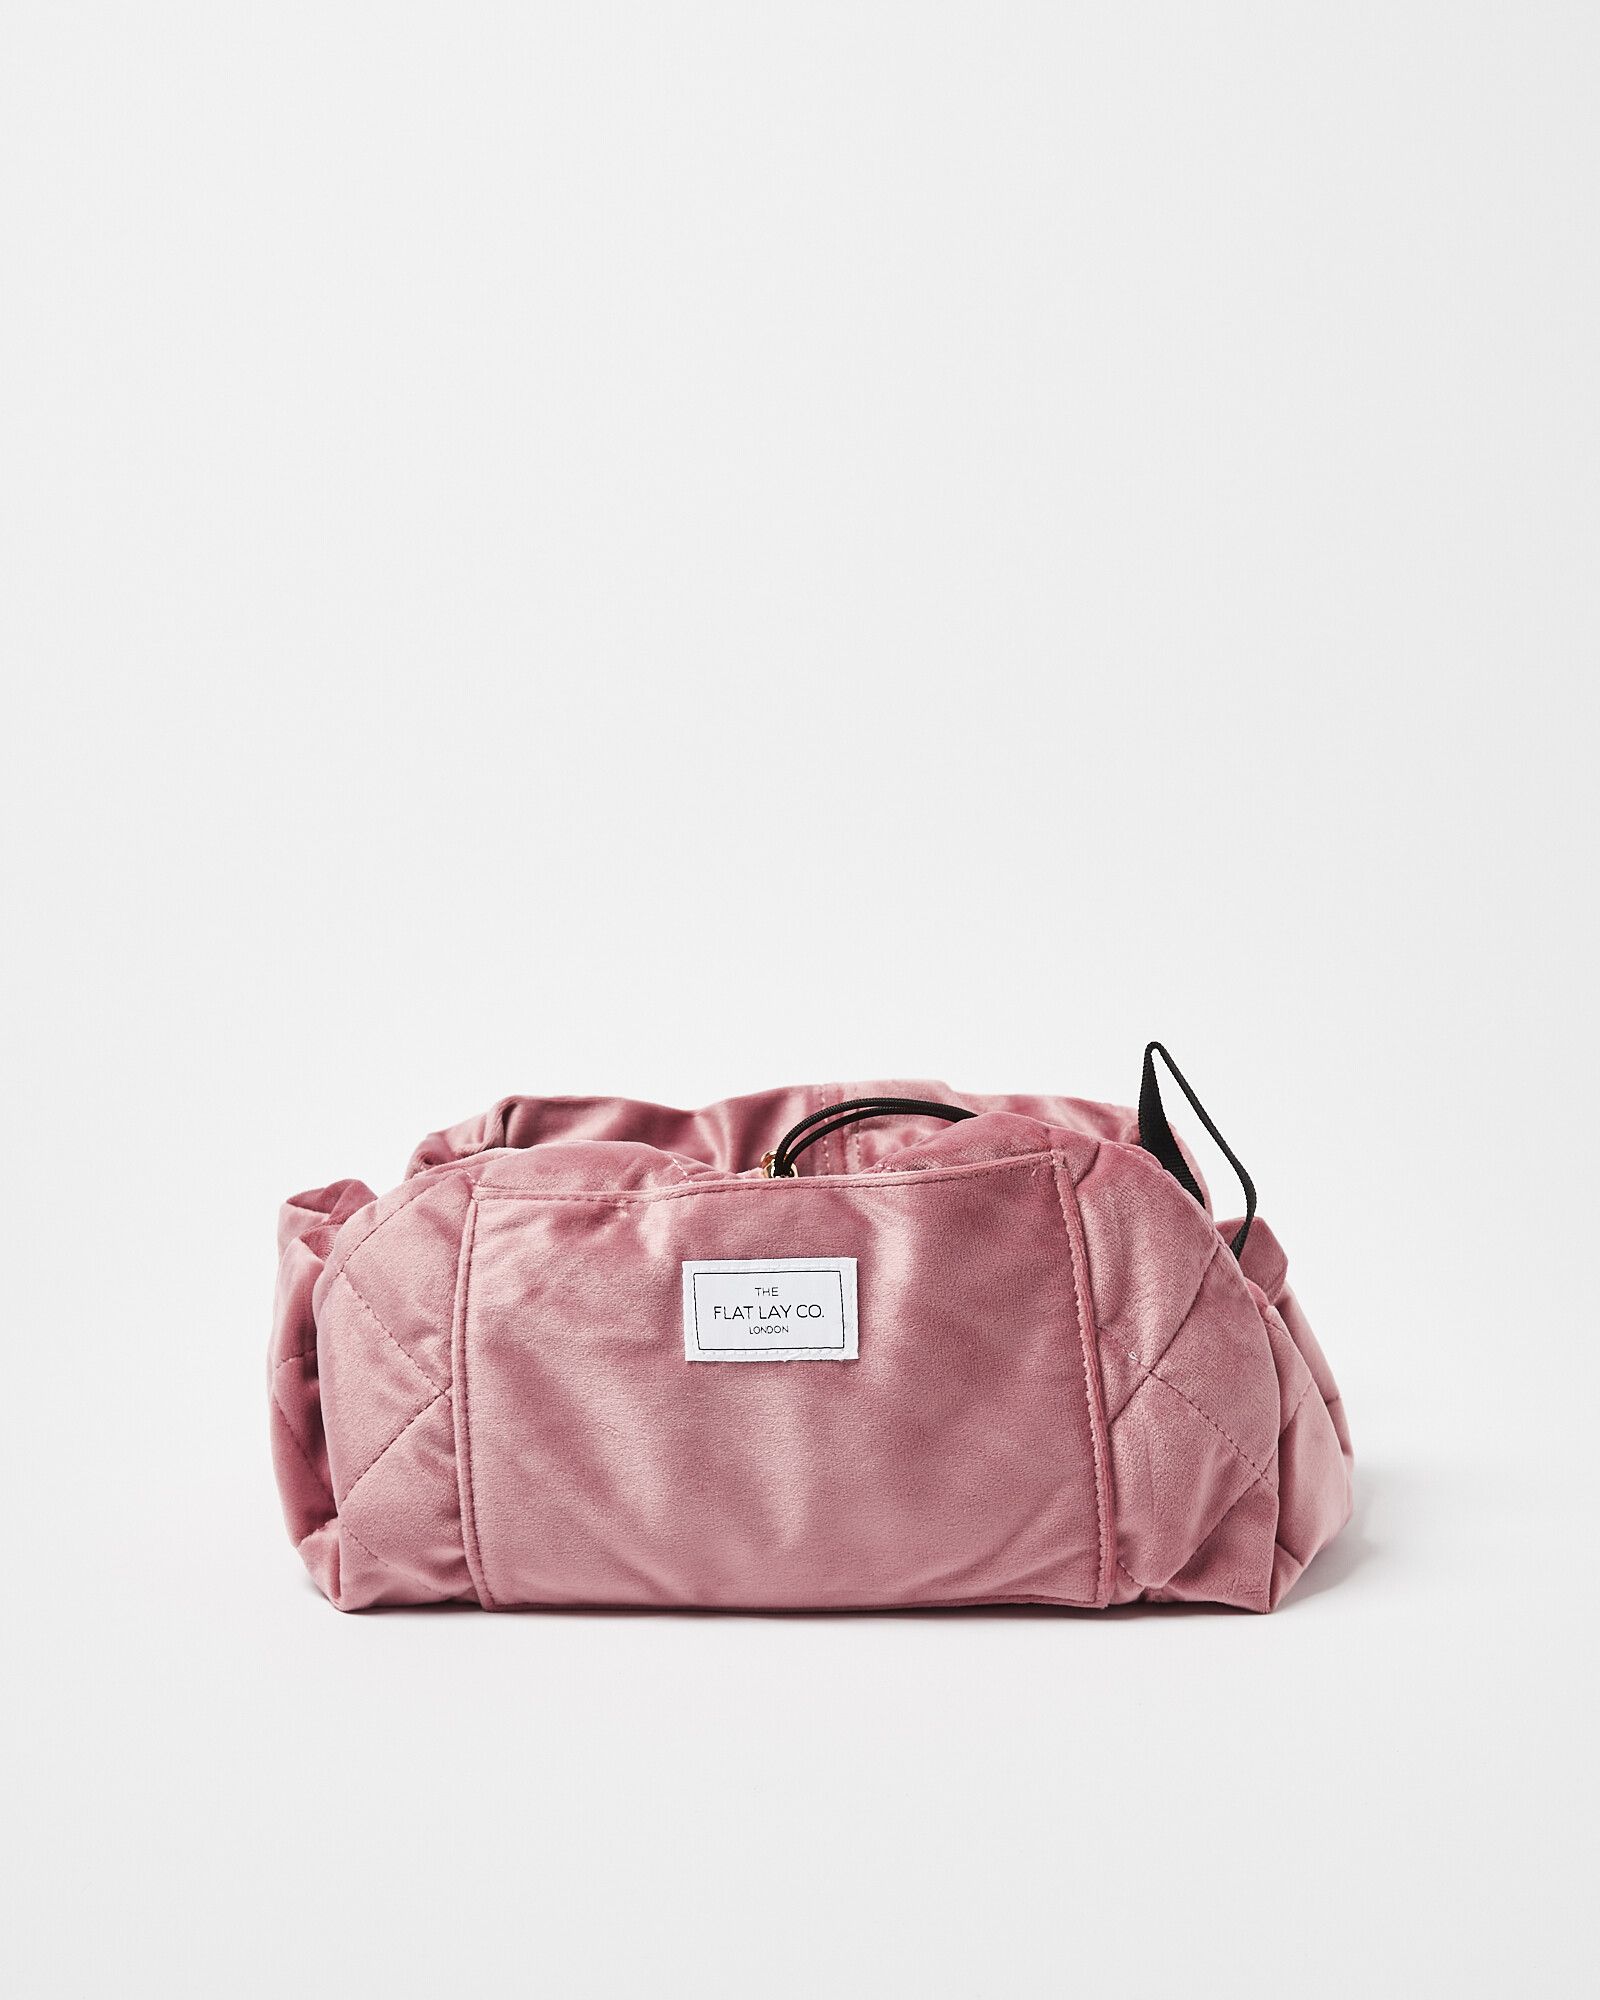 The Flat Lay Co Pink Velvet Make Up Bag | Oliver Bonas